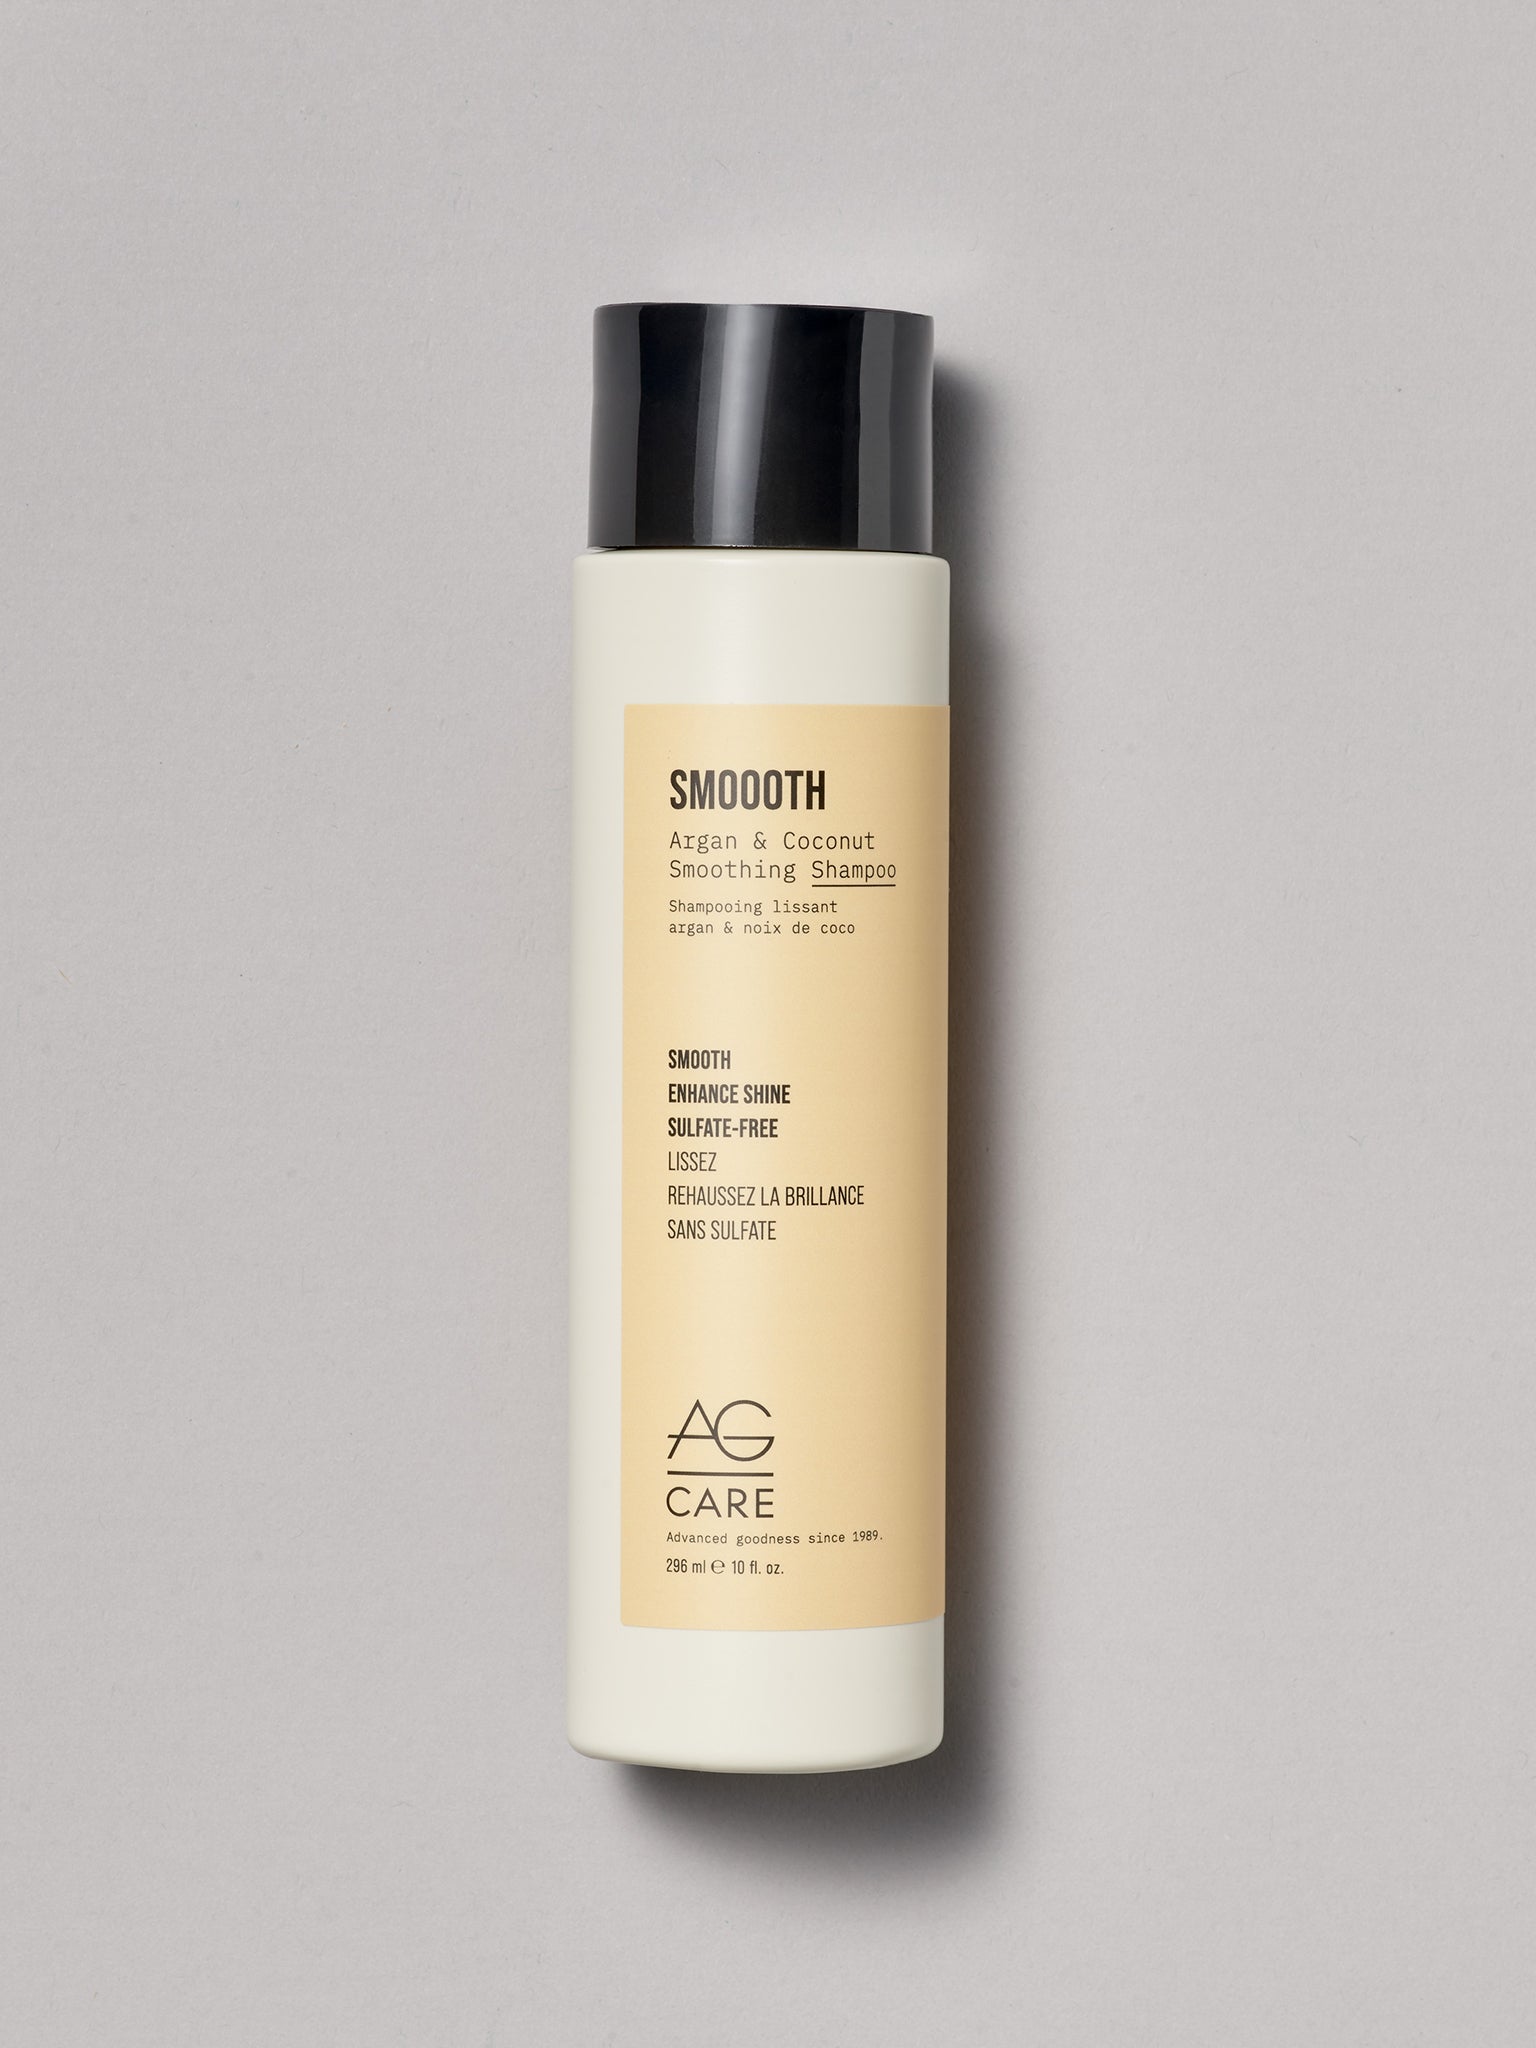 AG SMOOOTH: Argan & Coconut Smoothing Shampoo